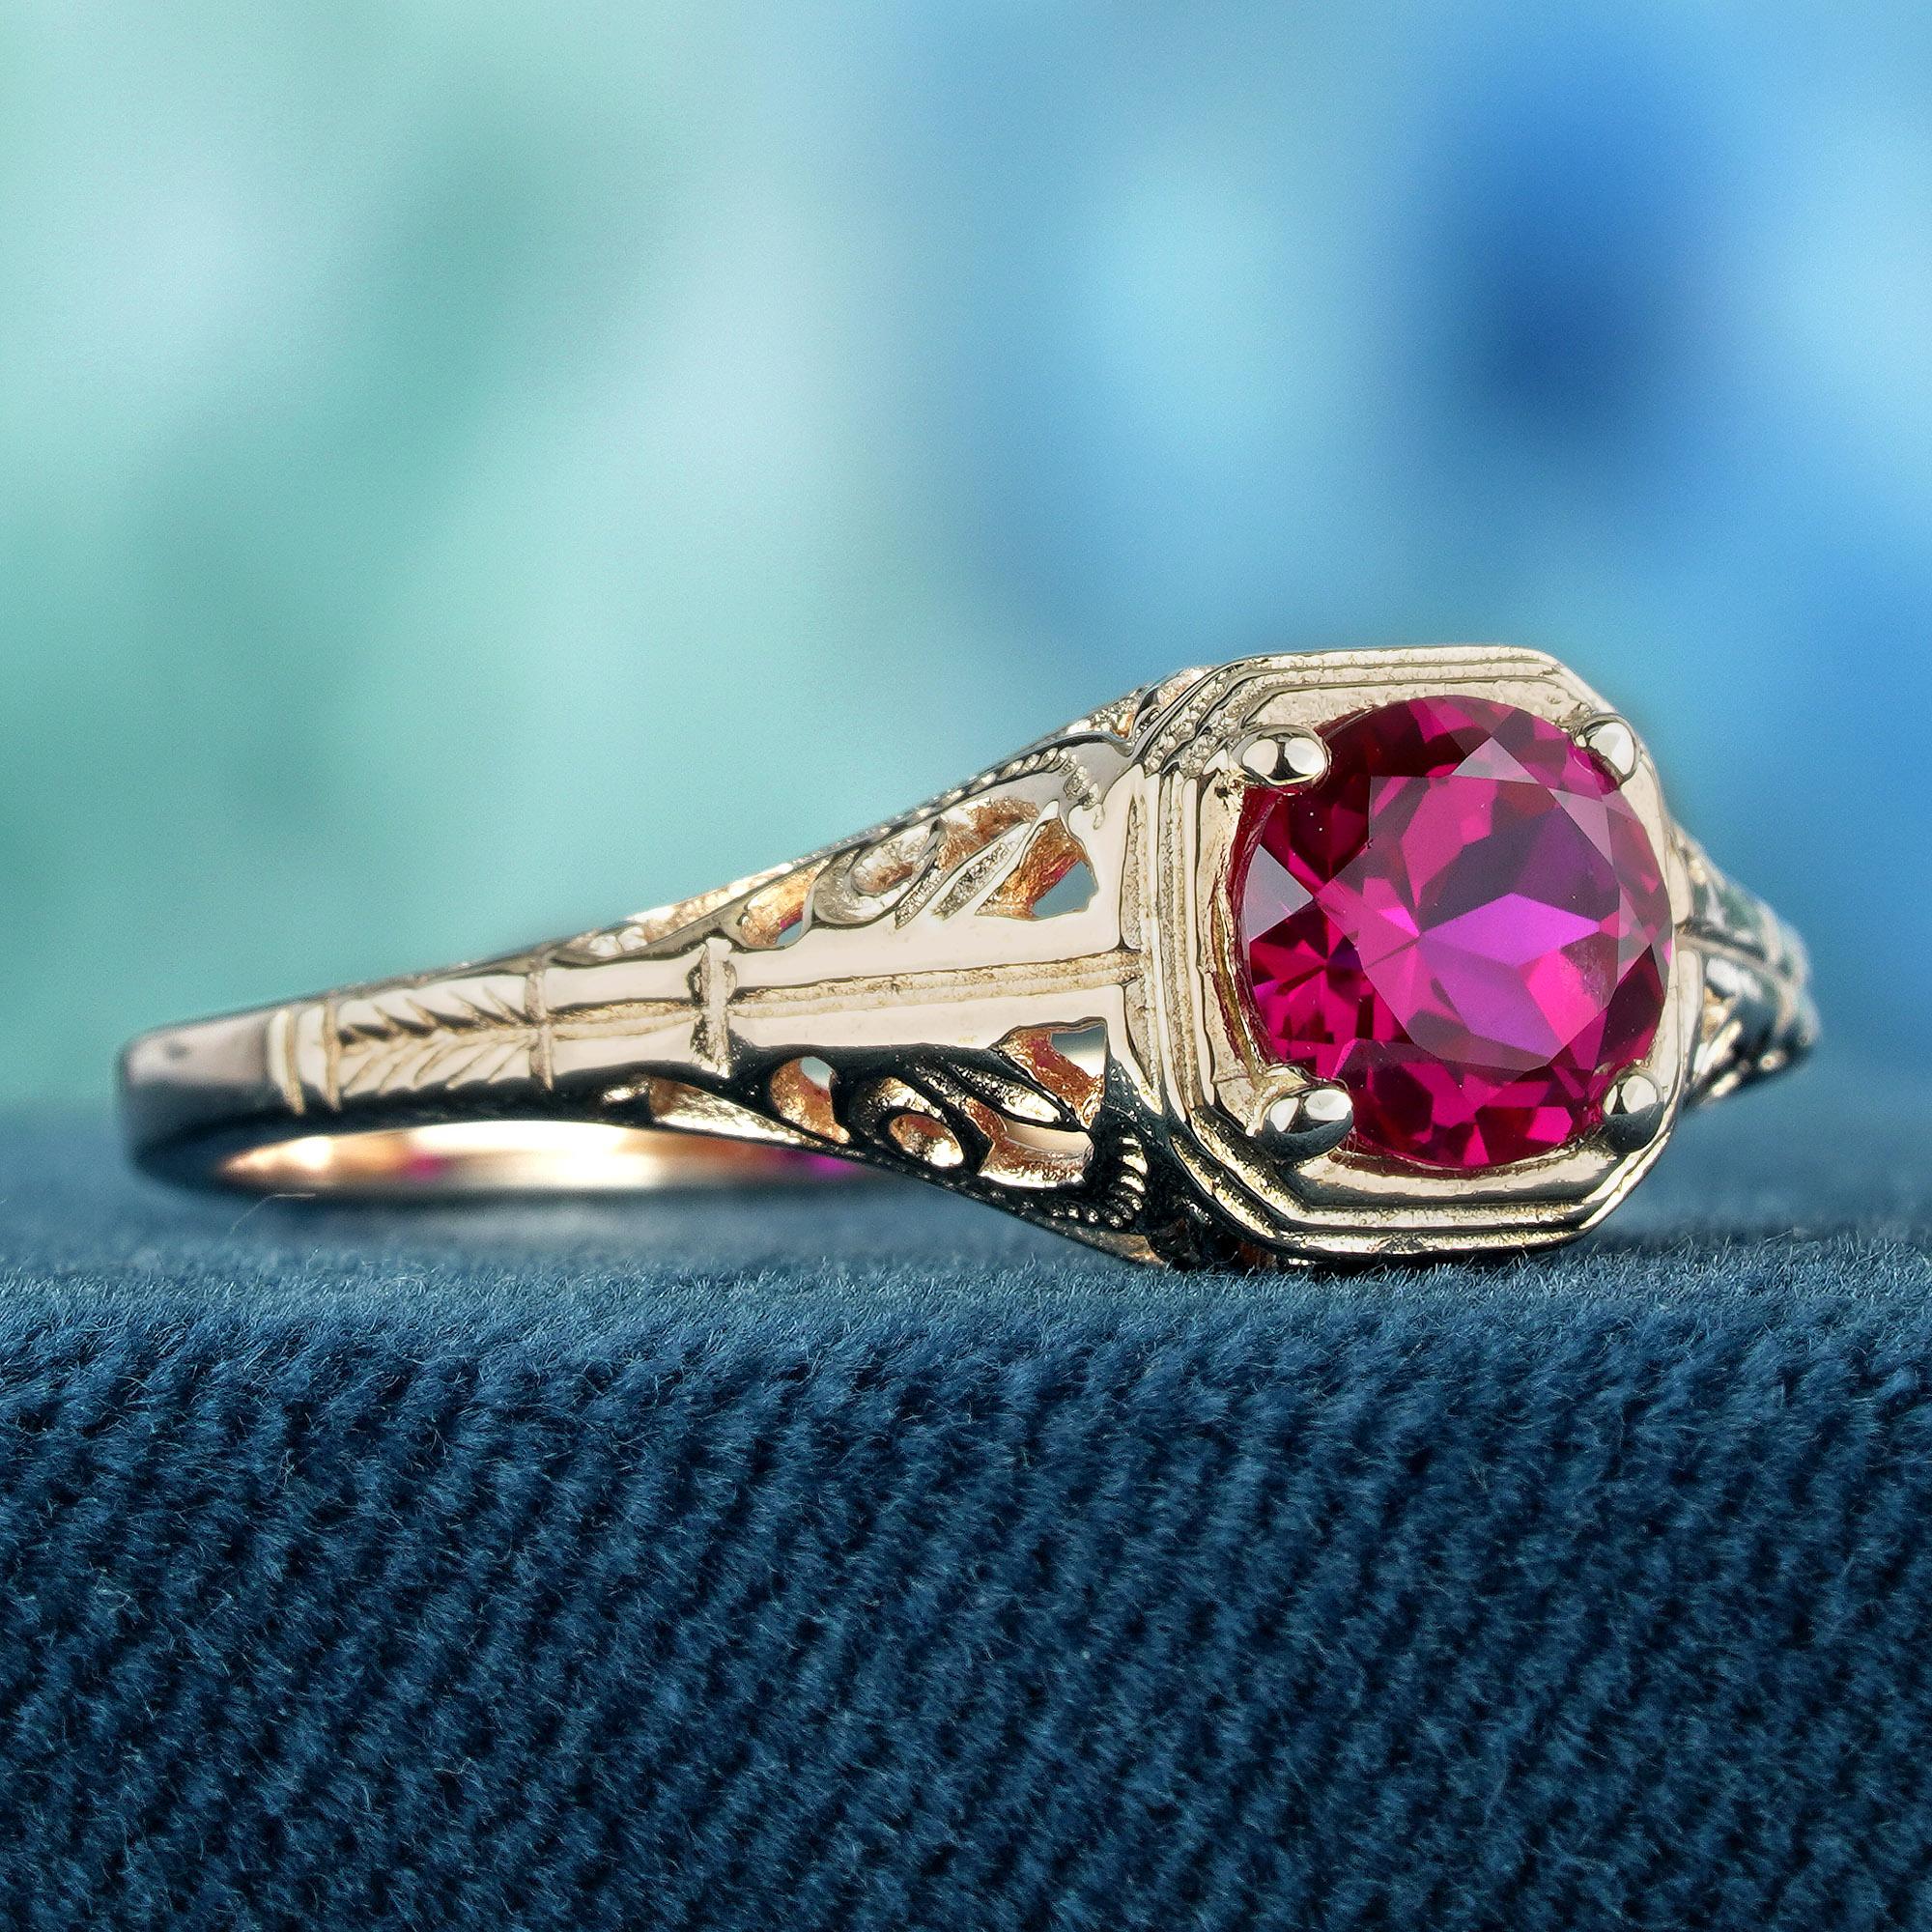 Edwardian Natural Ruby Vintage Style Filigree Ring in Solid 9K Rose Gold For Sale